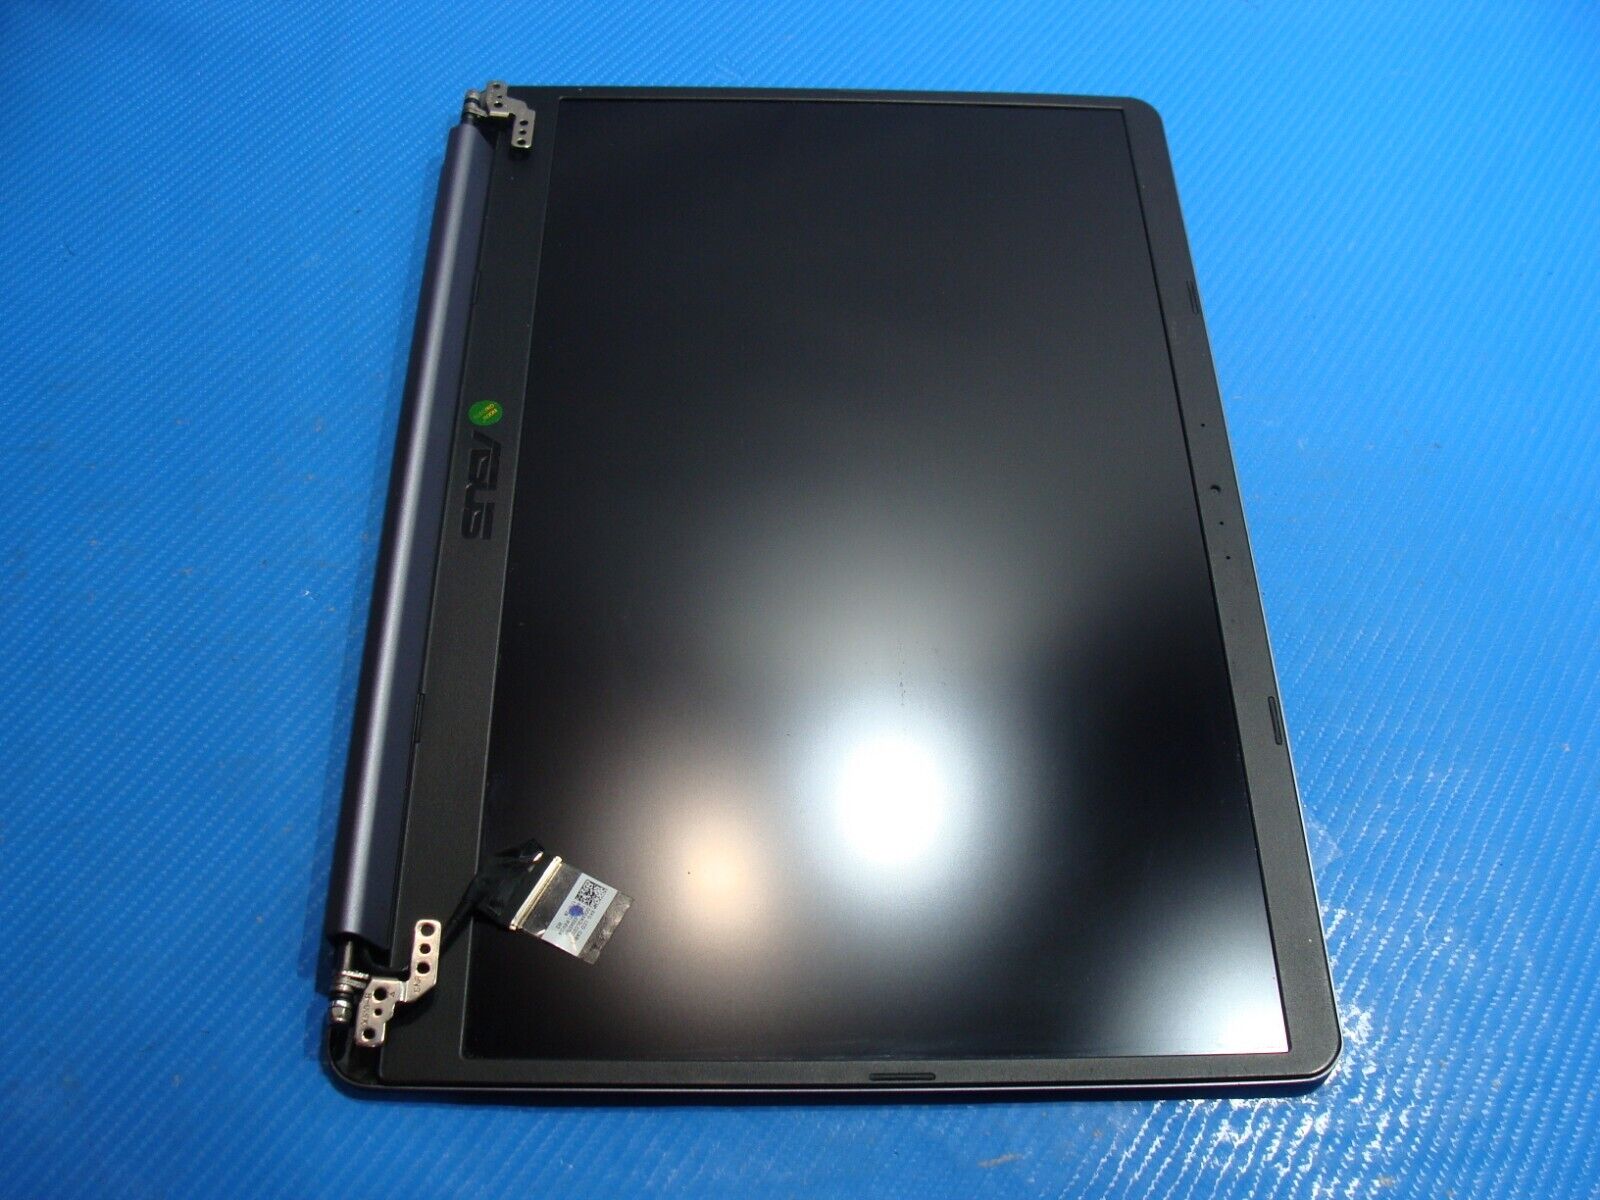 Asus Vivobook S510UN-MS52 15.6